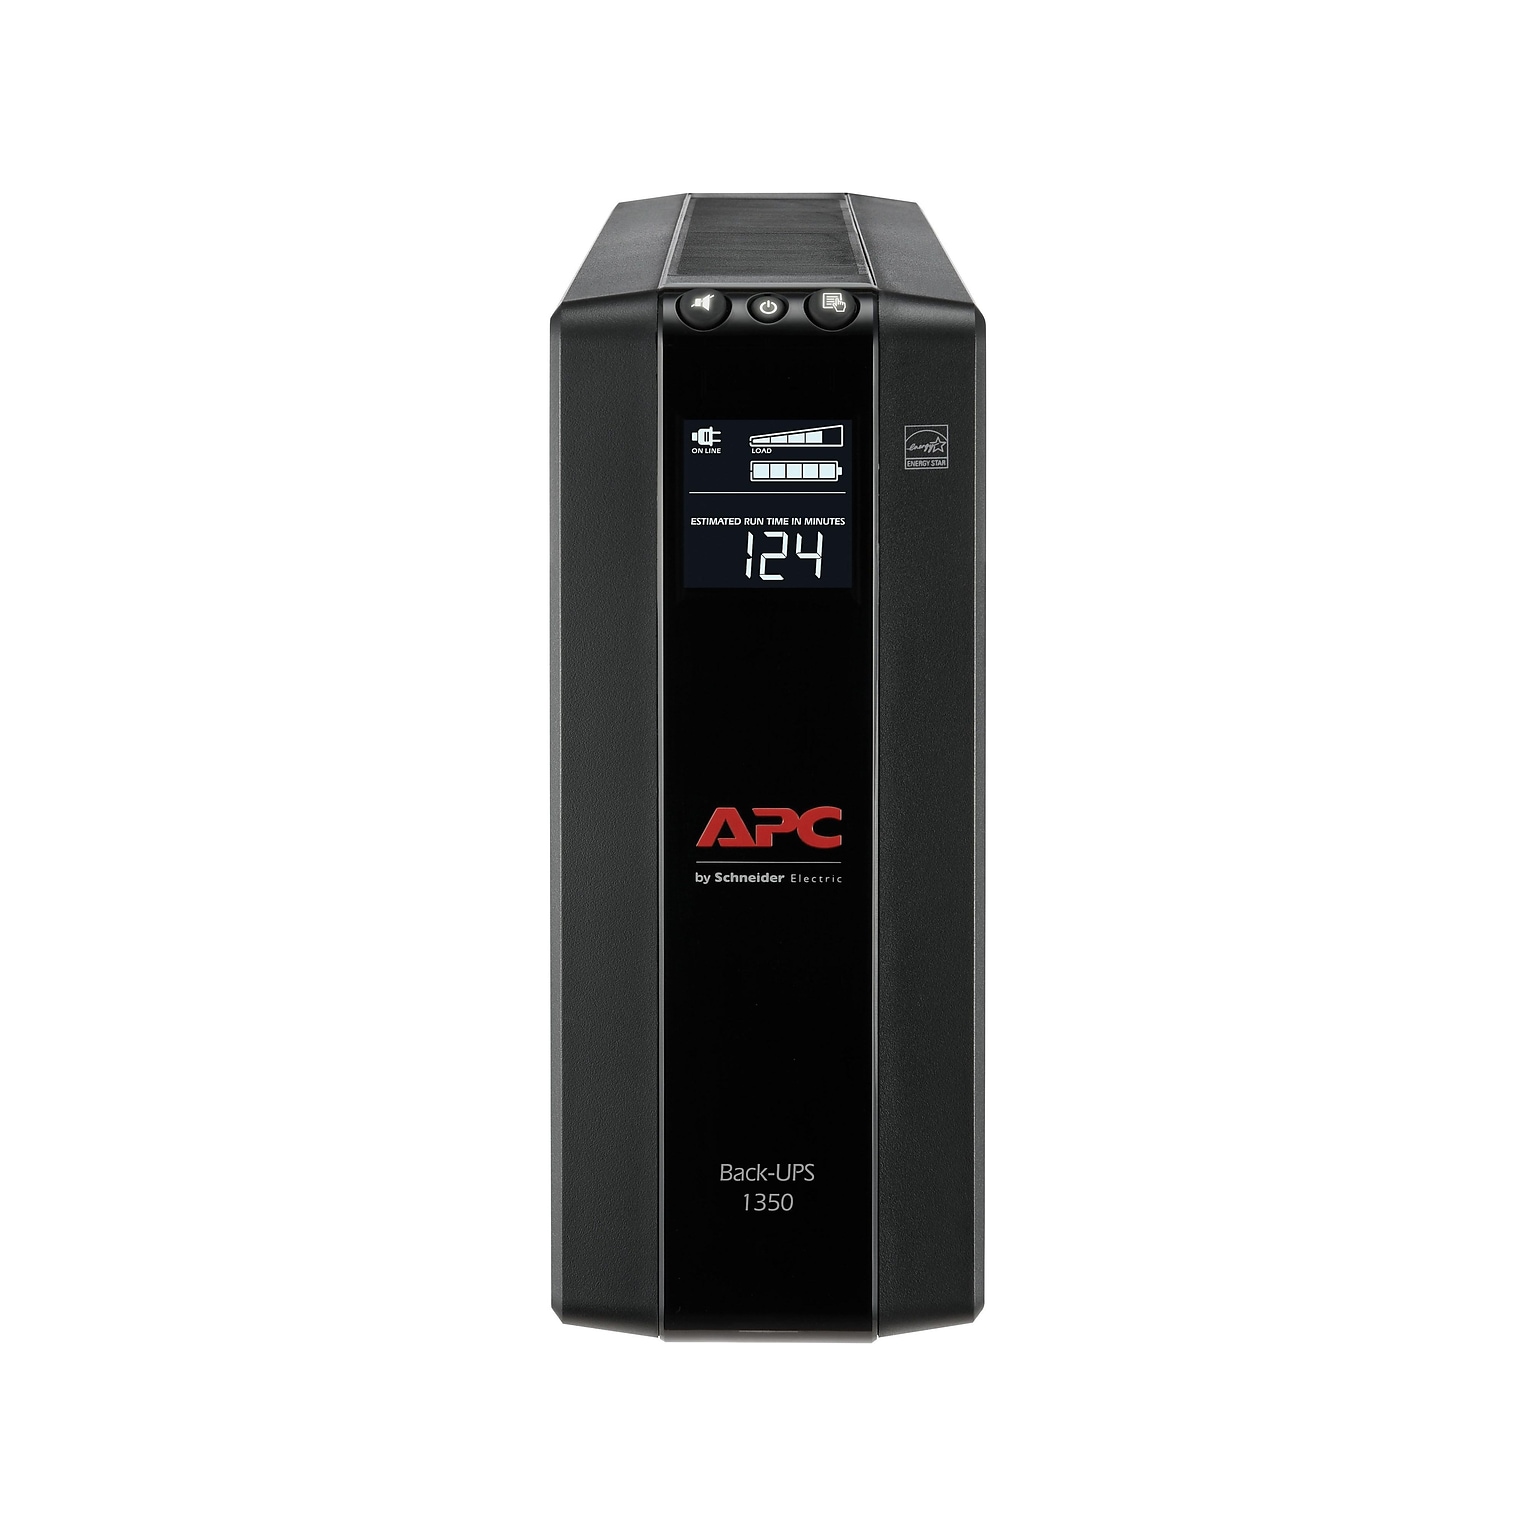 APC Back UPS Pro Battery Backup and Surge Protector, Compact Tower, 1350VA, AVR, LCD, 120V, Black (BX1350M)